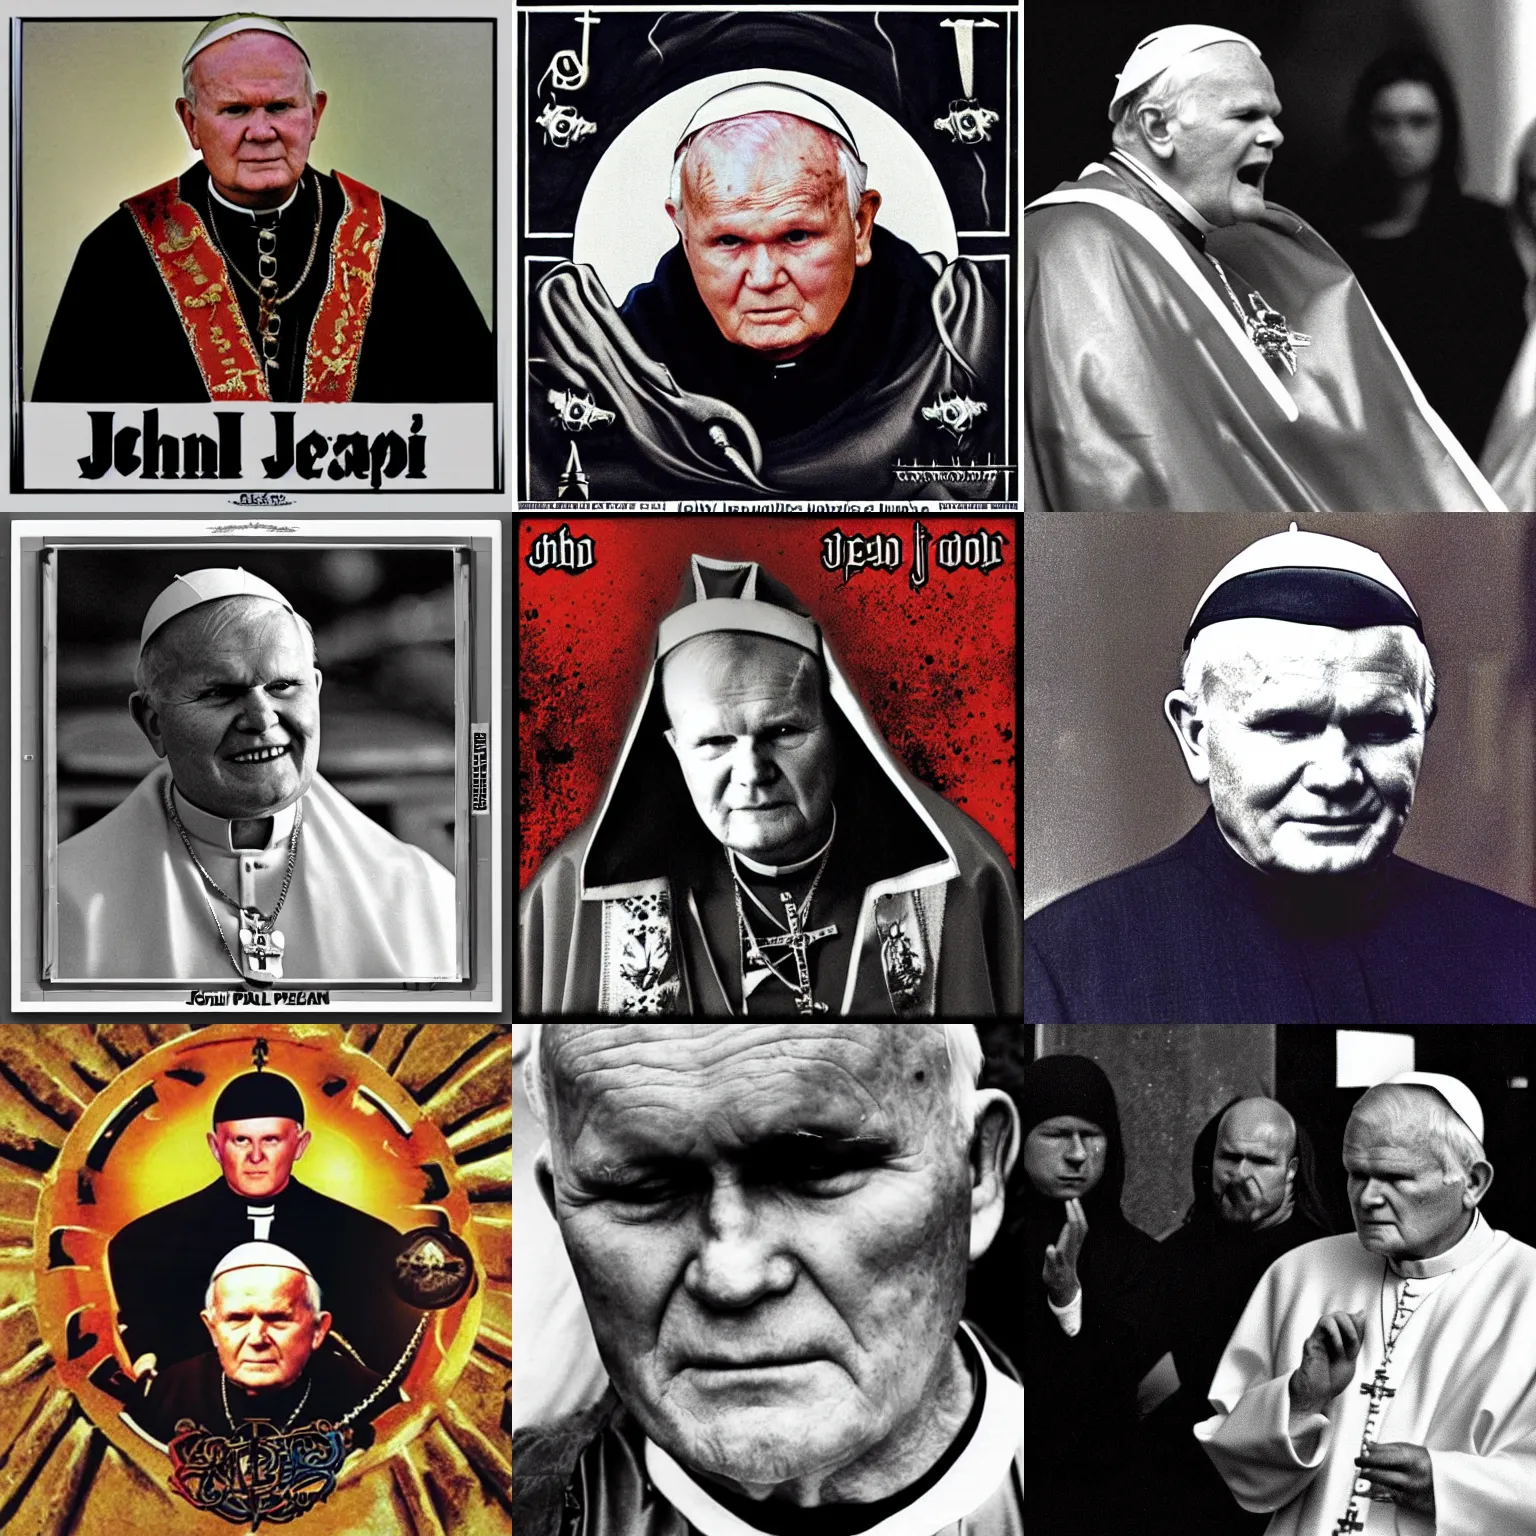 Prompt: John Paul II, heavy metal album cover